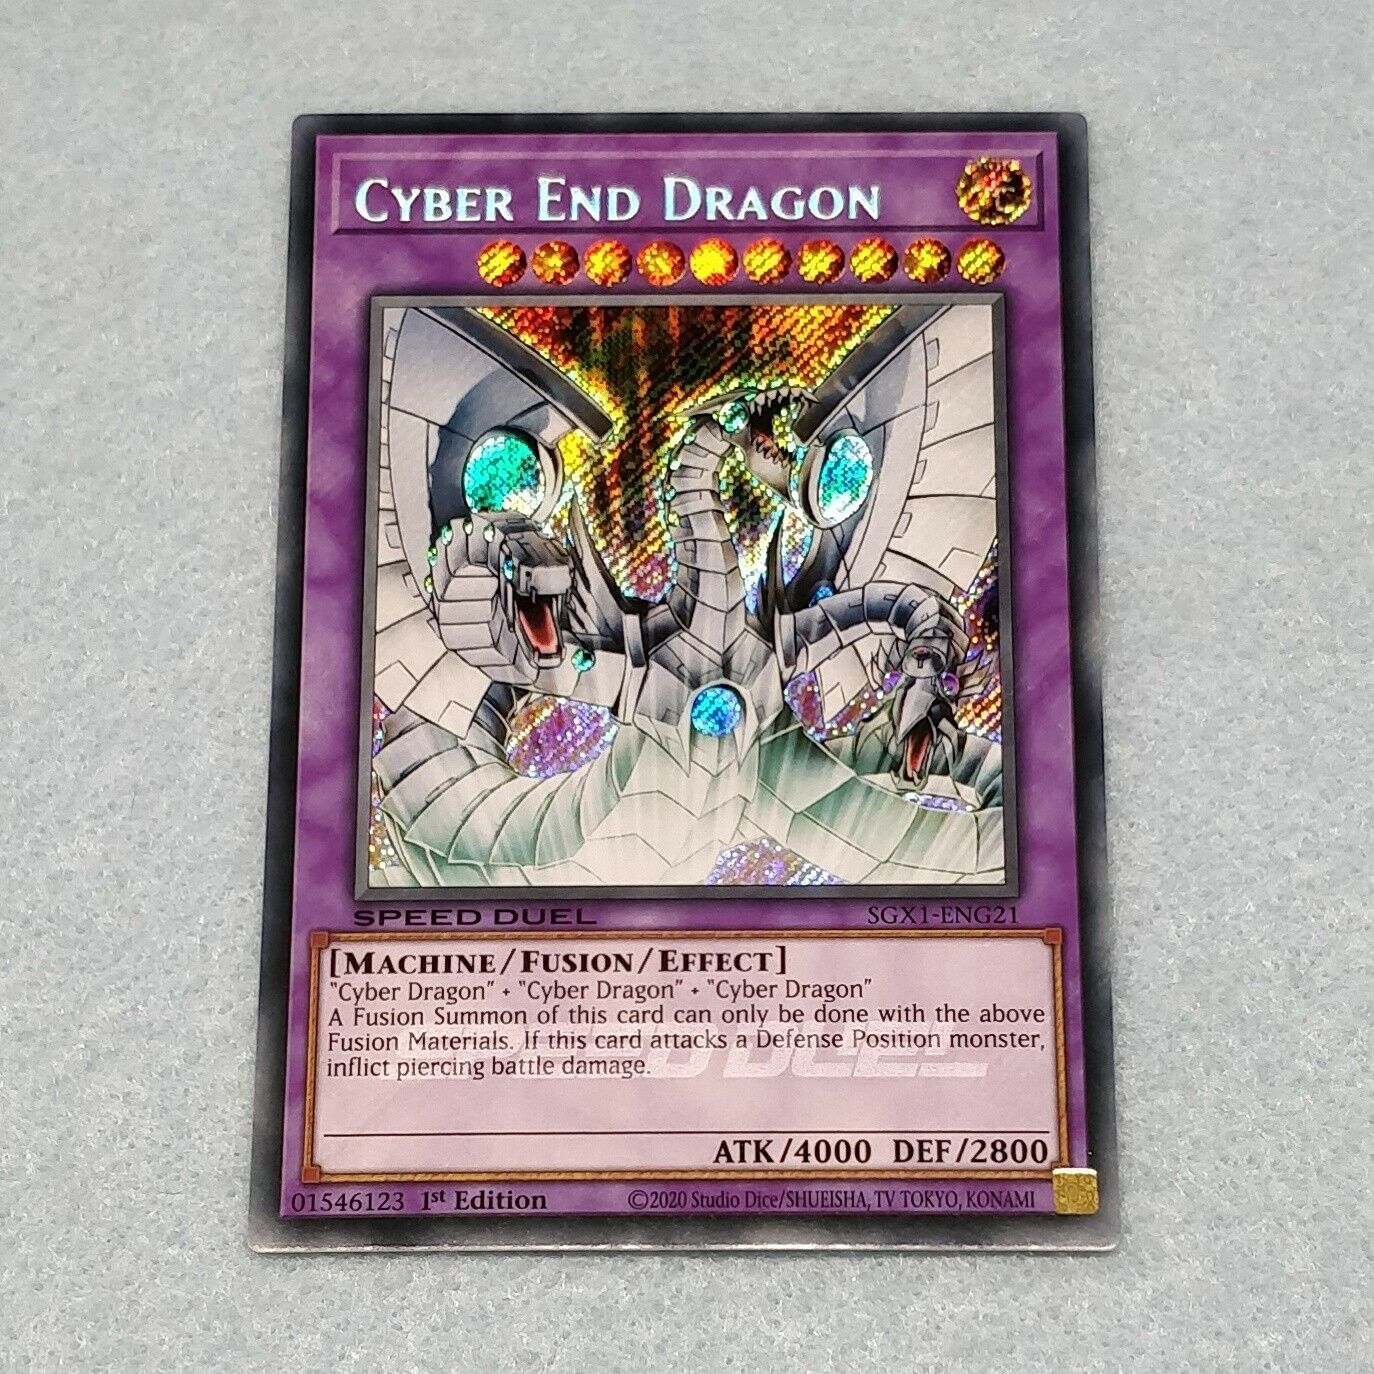 1x Yugioh Cyber End Dragon SGX1 1st Edition Secret Rare Card NM